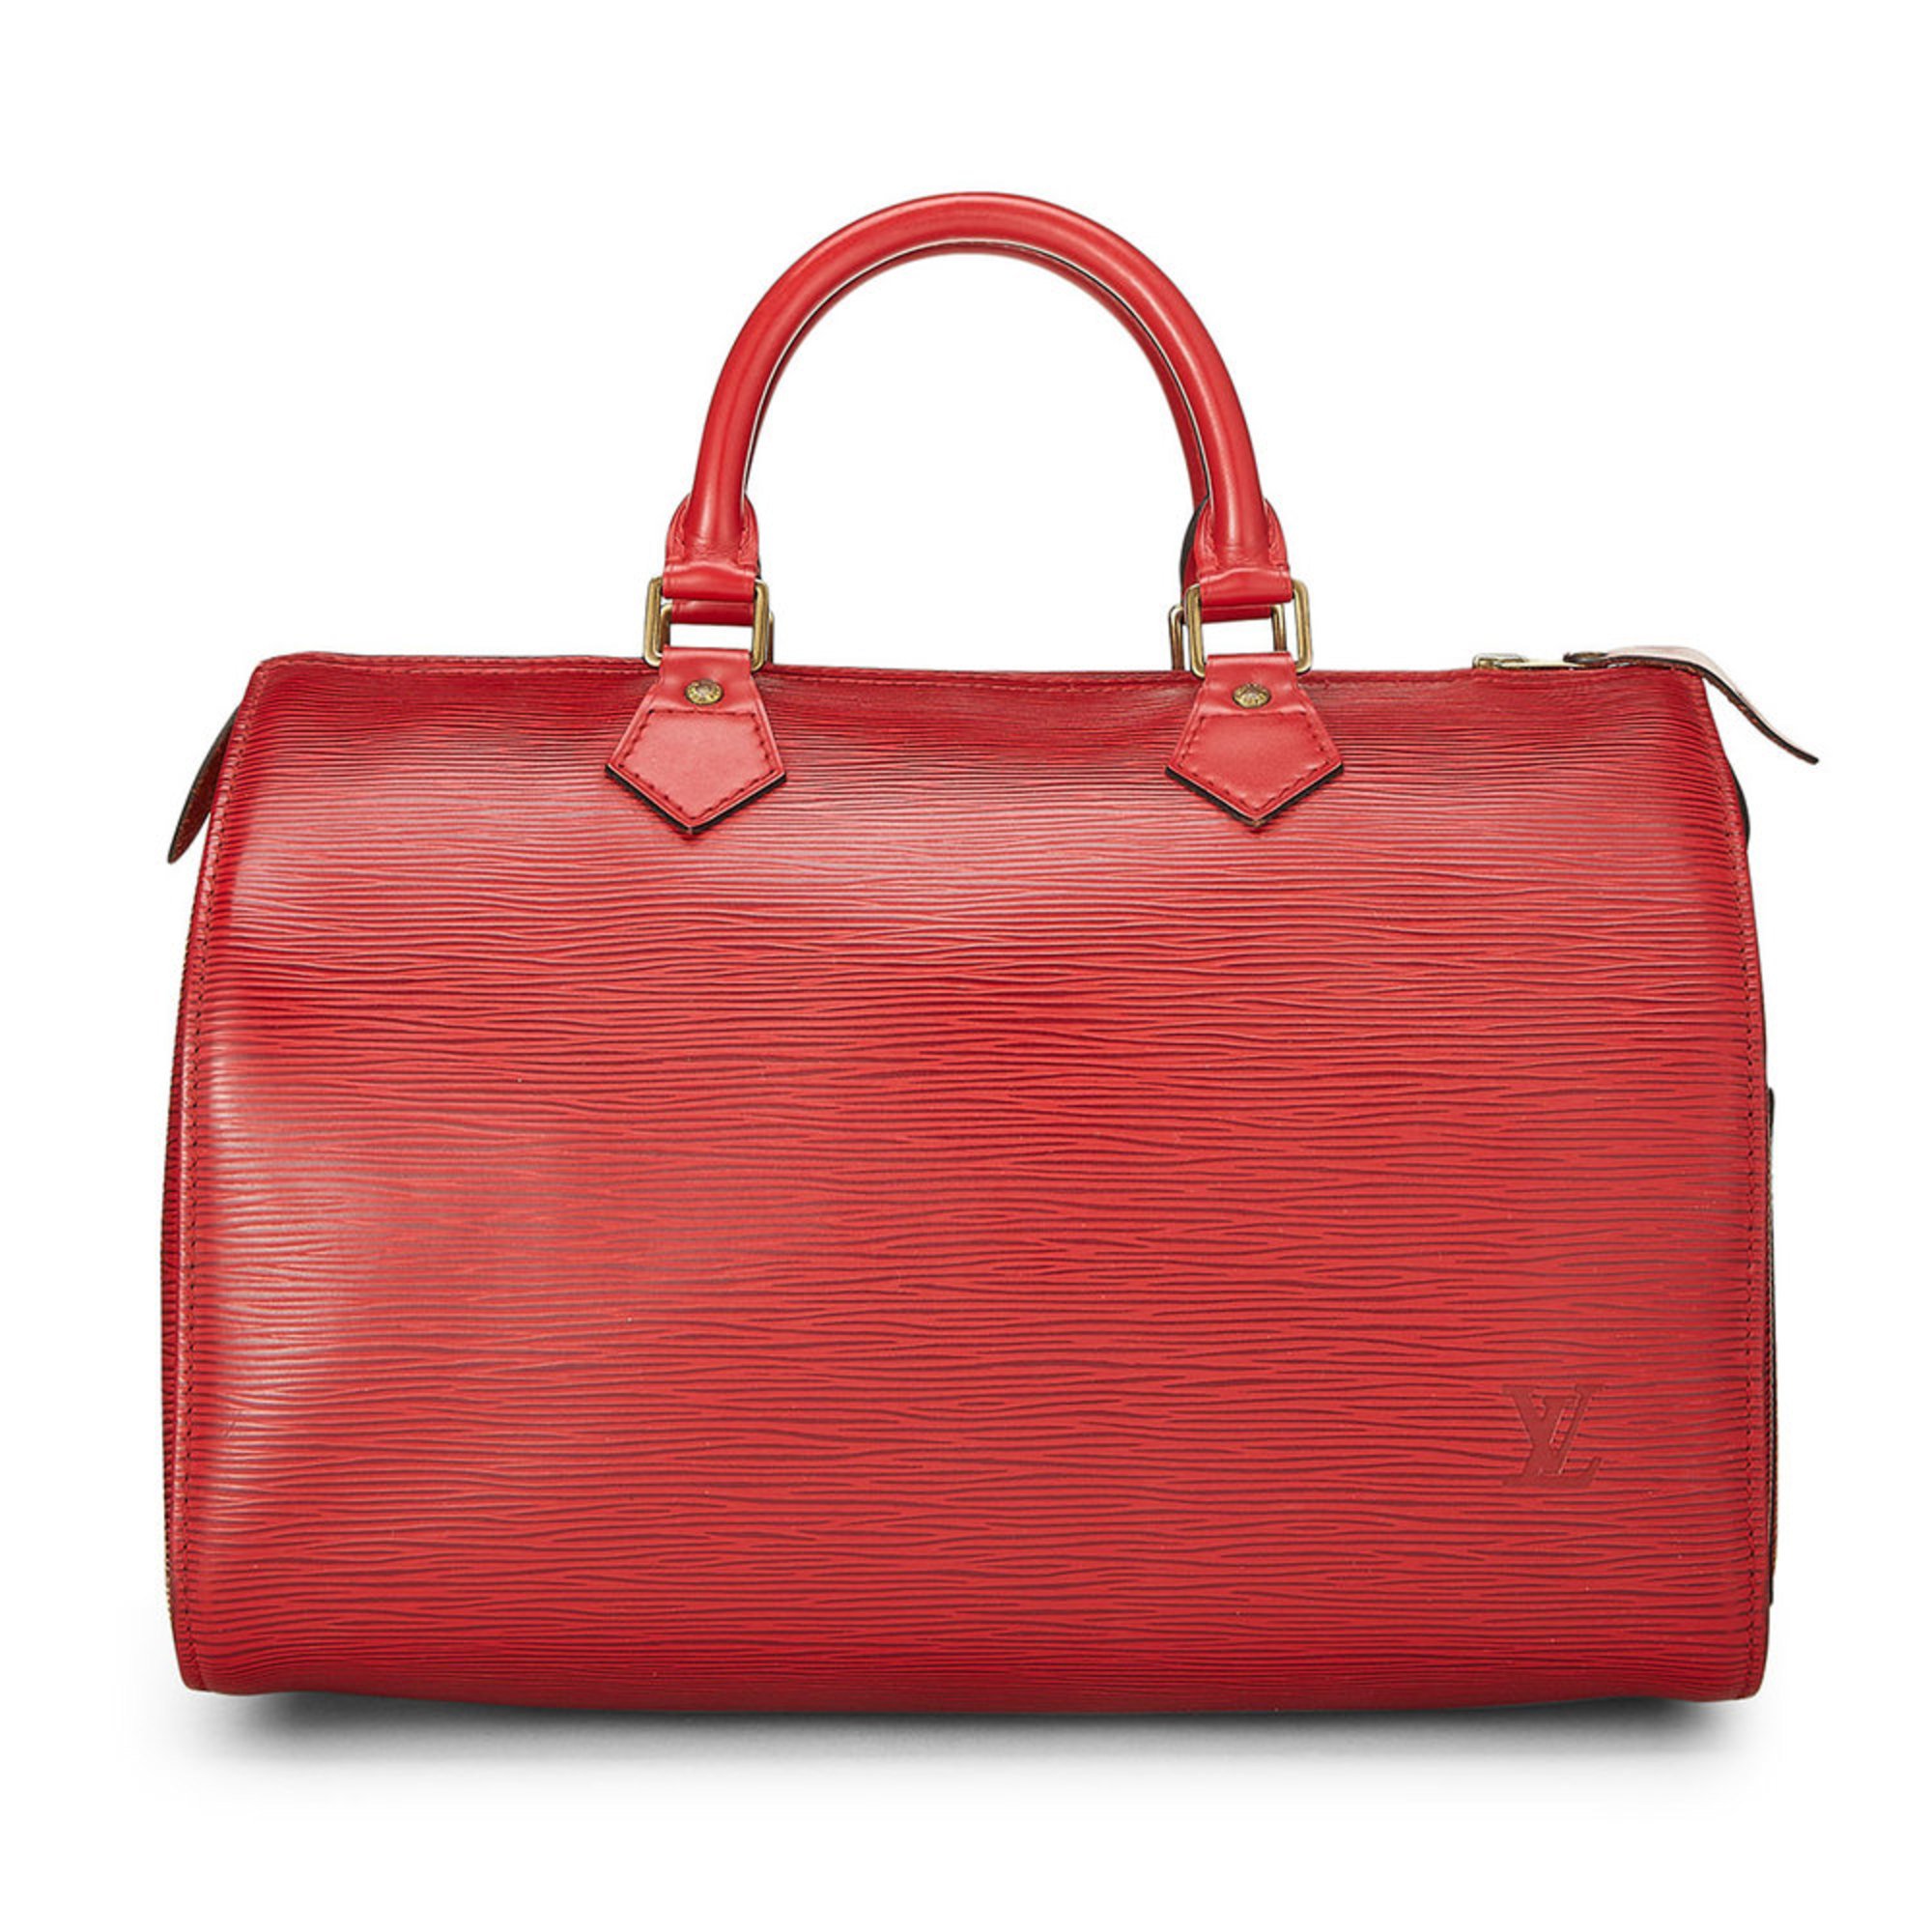 Louis Vuitton Epi Speedy 30 Red | Satchels | Accessories - Shop Your Navy Exchange - Official Site